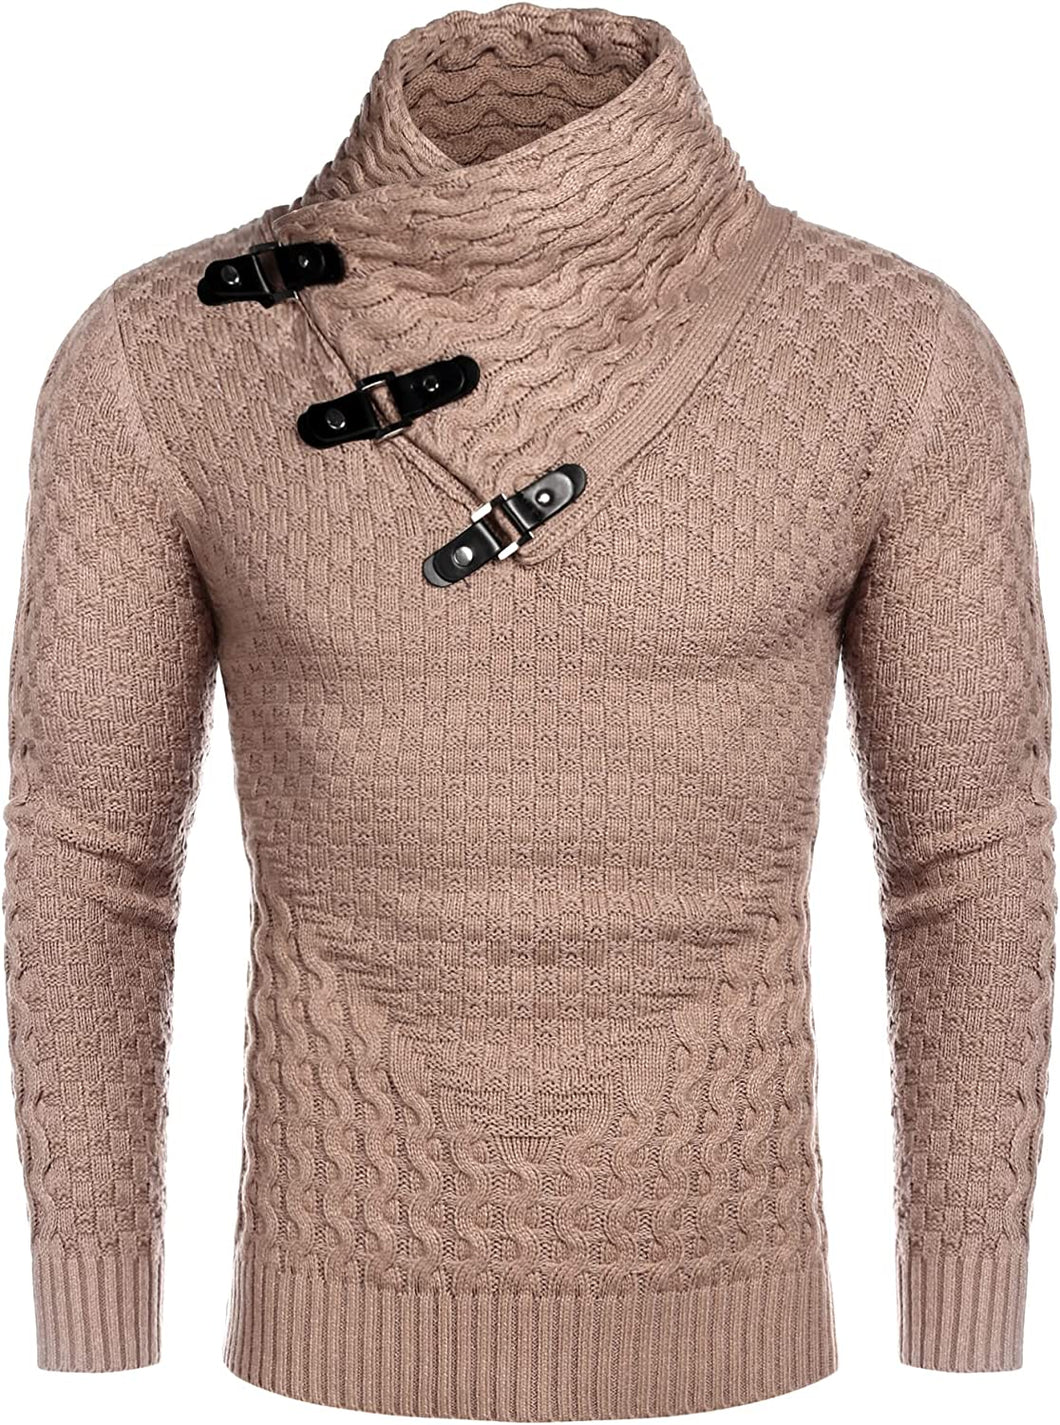 Men's Khaki Turtle Neck Long Sleeve Slim Fit Sweater